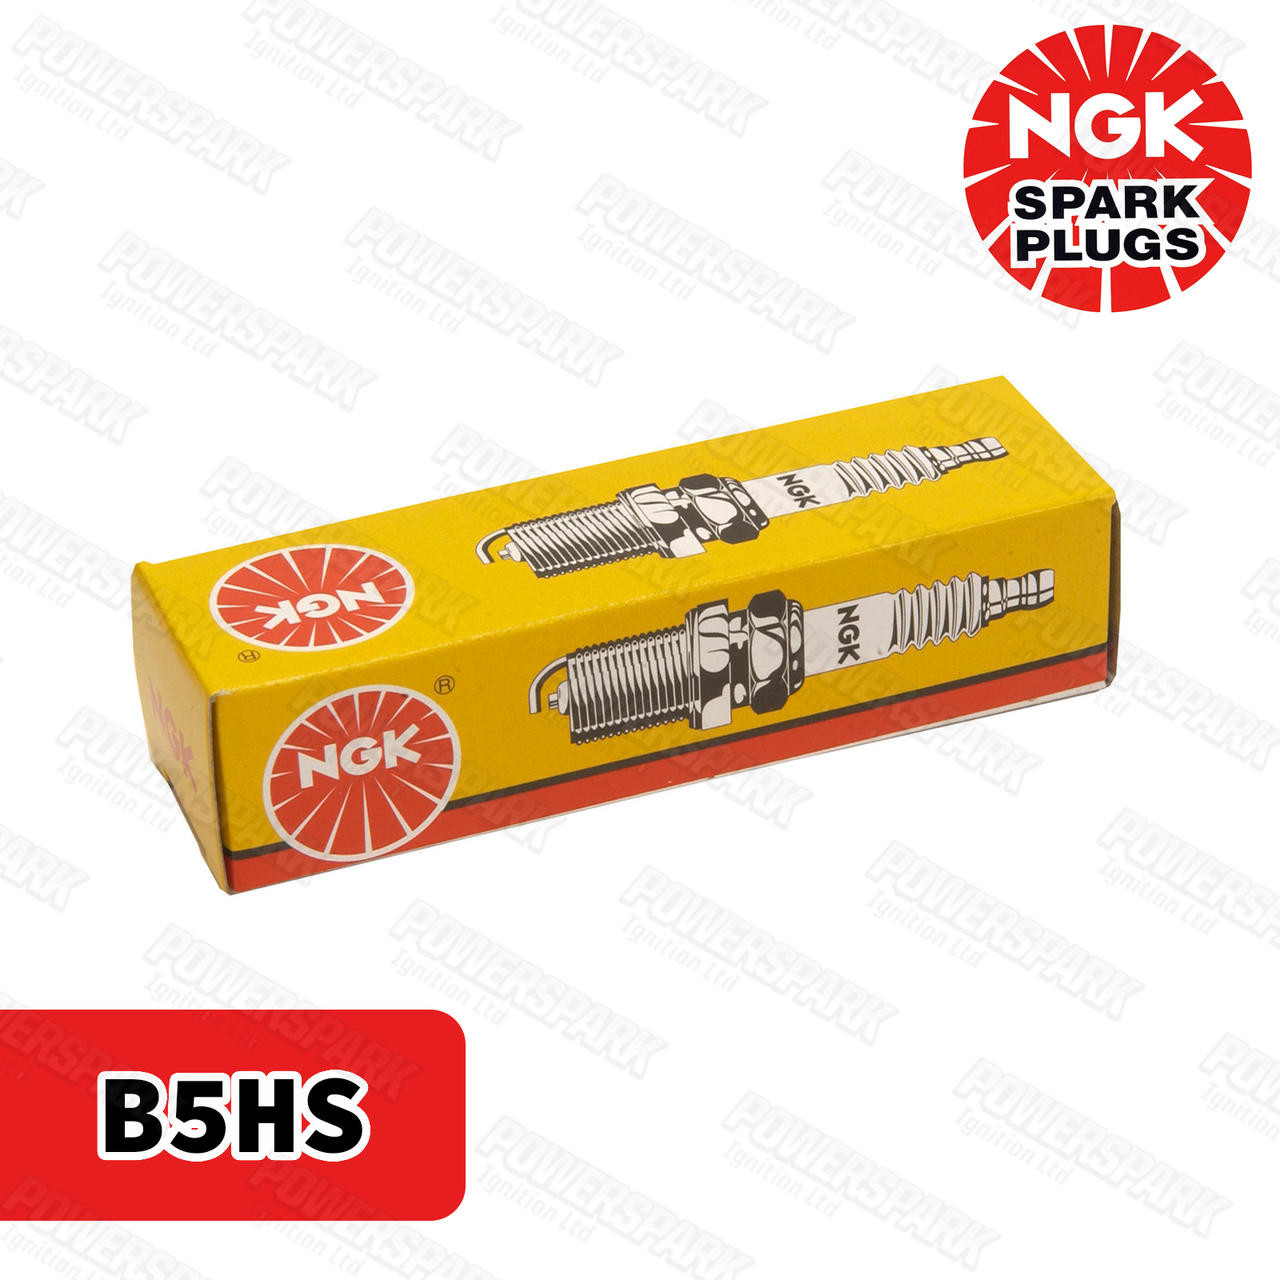 NGK Spark Plugs NGK B5HS Spark Plug for Classic and Modern Cars